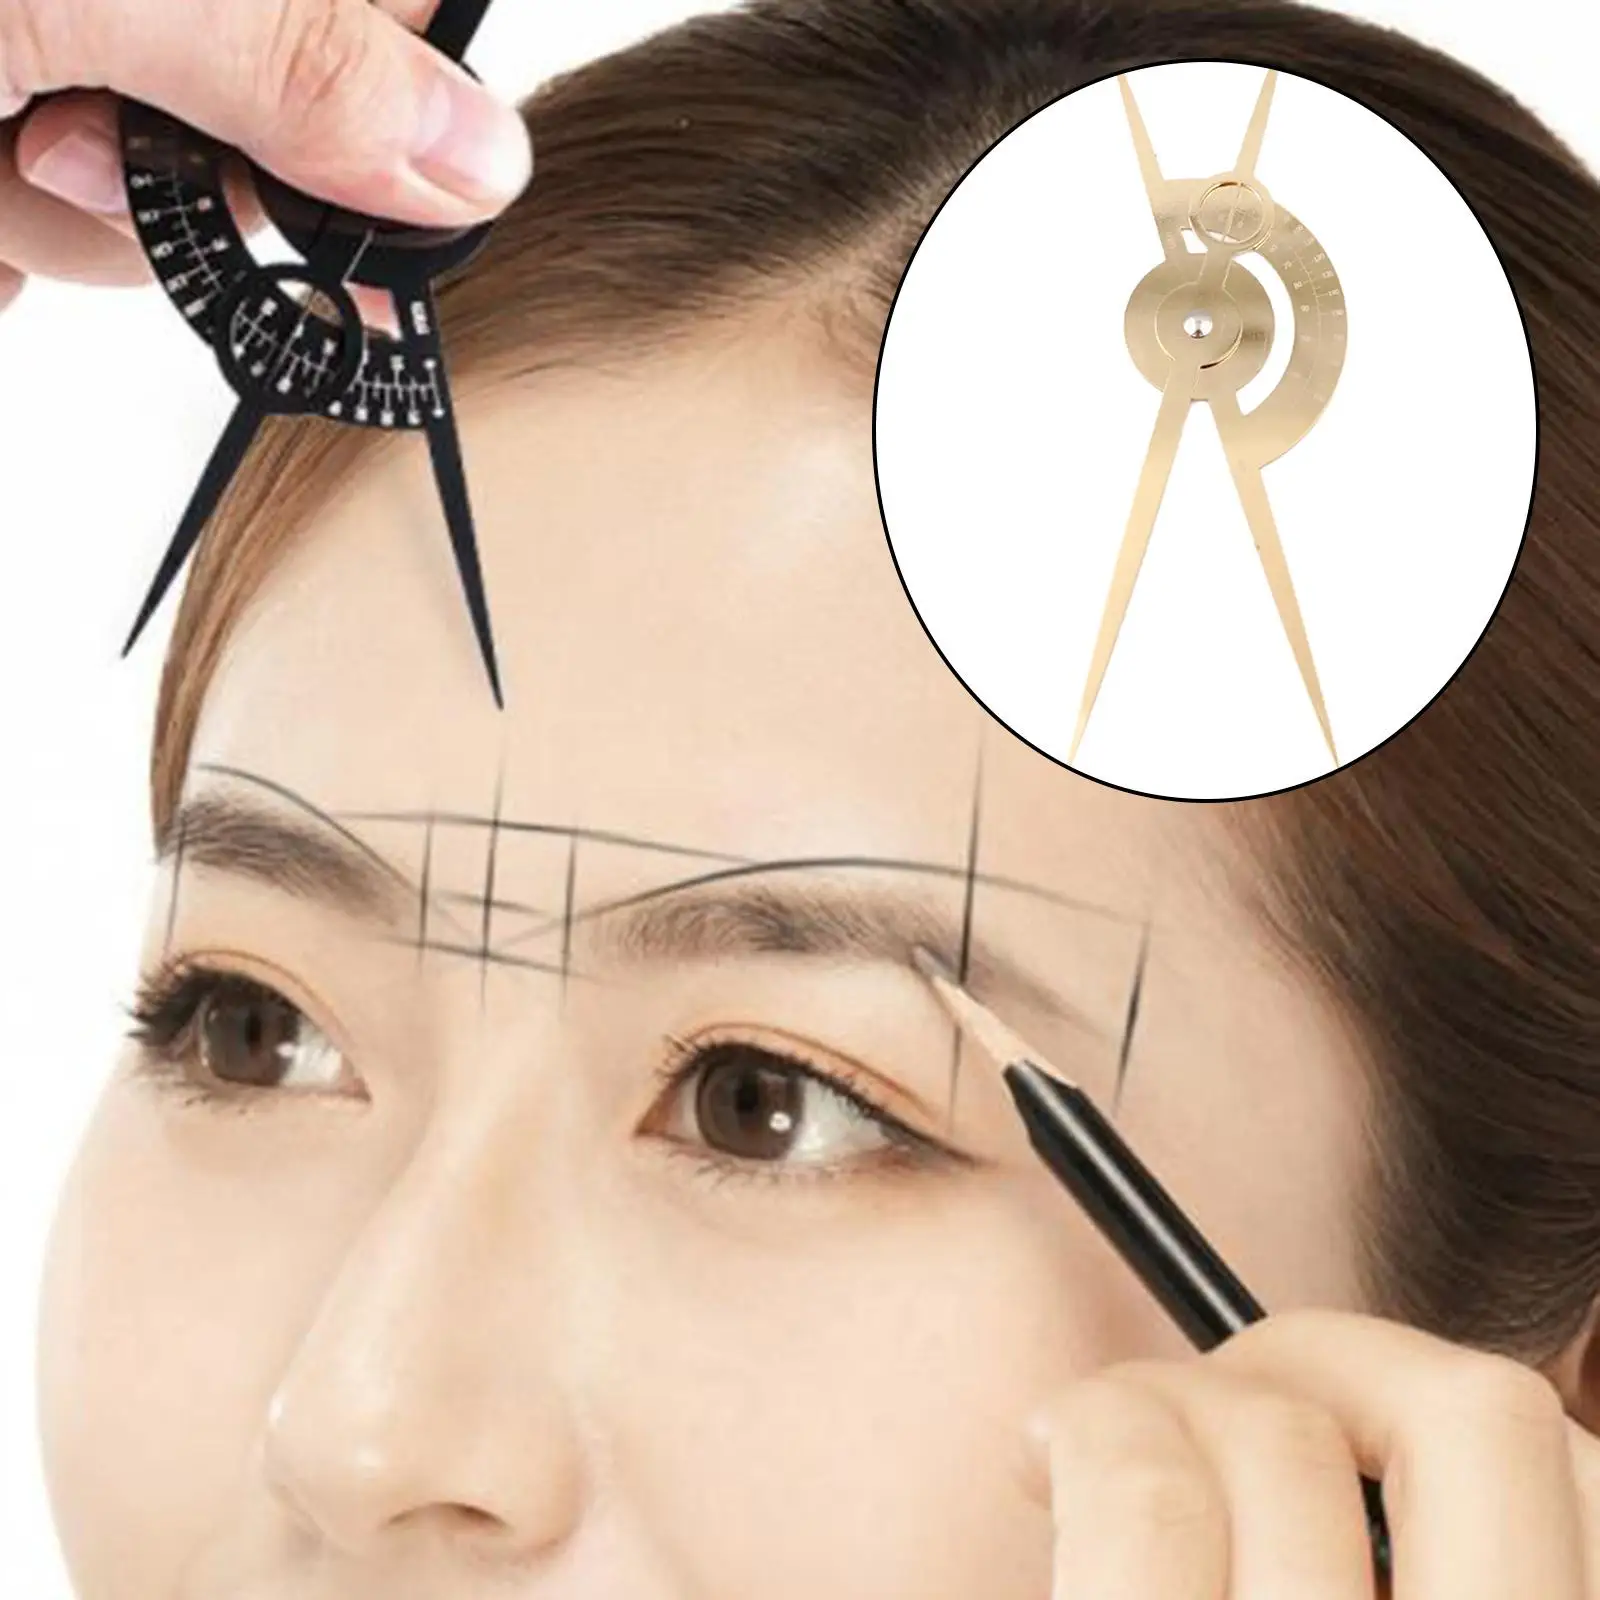  Ratio Caliper  Eyebrow Stainless Steel Ruler for Permanent Makeup Shaper DIY  Measure Tool